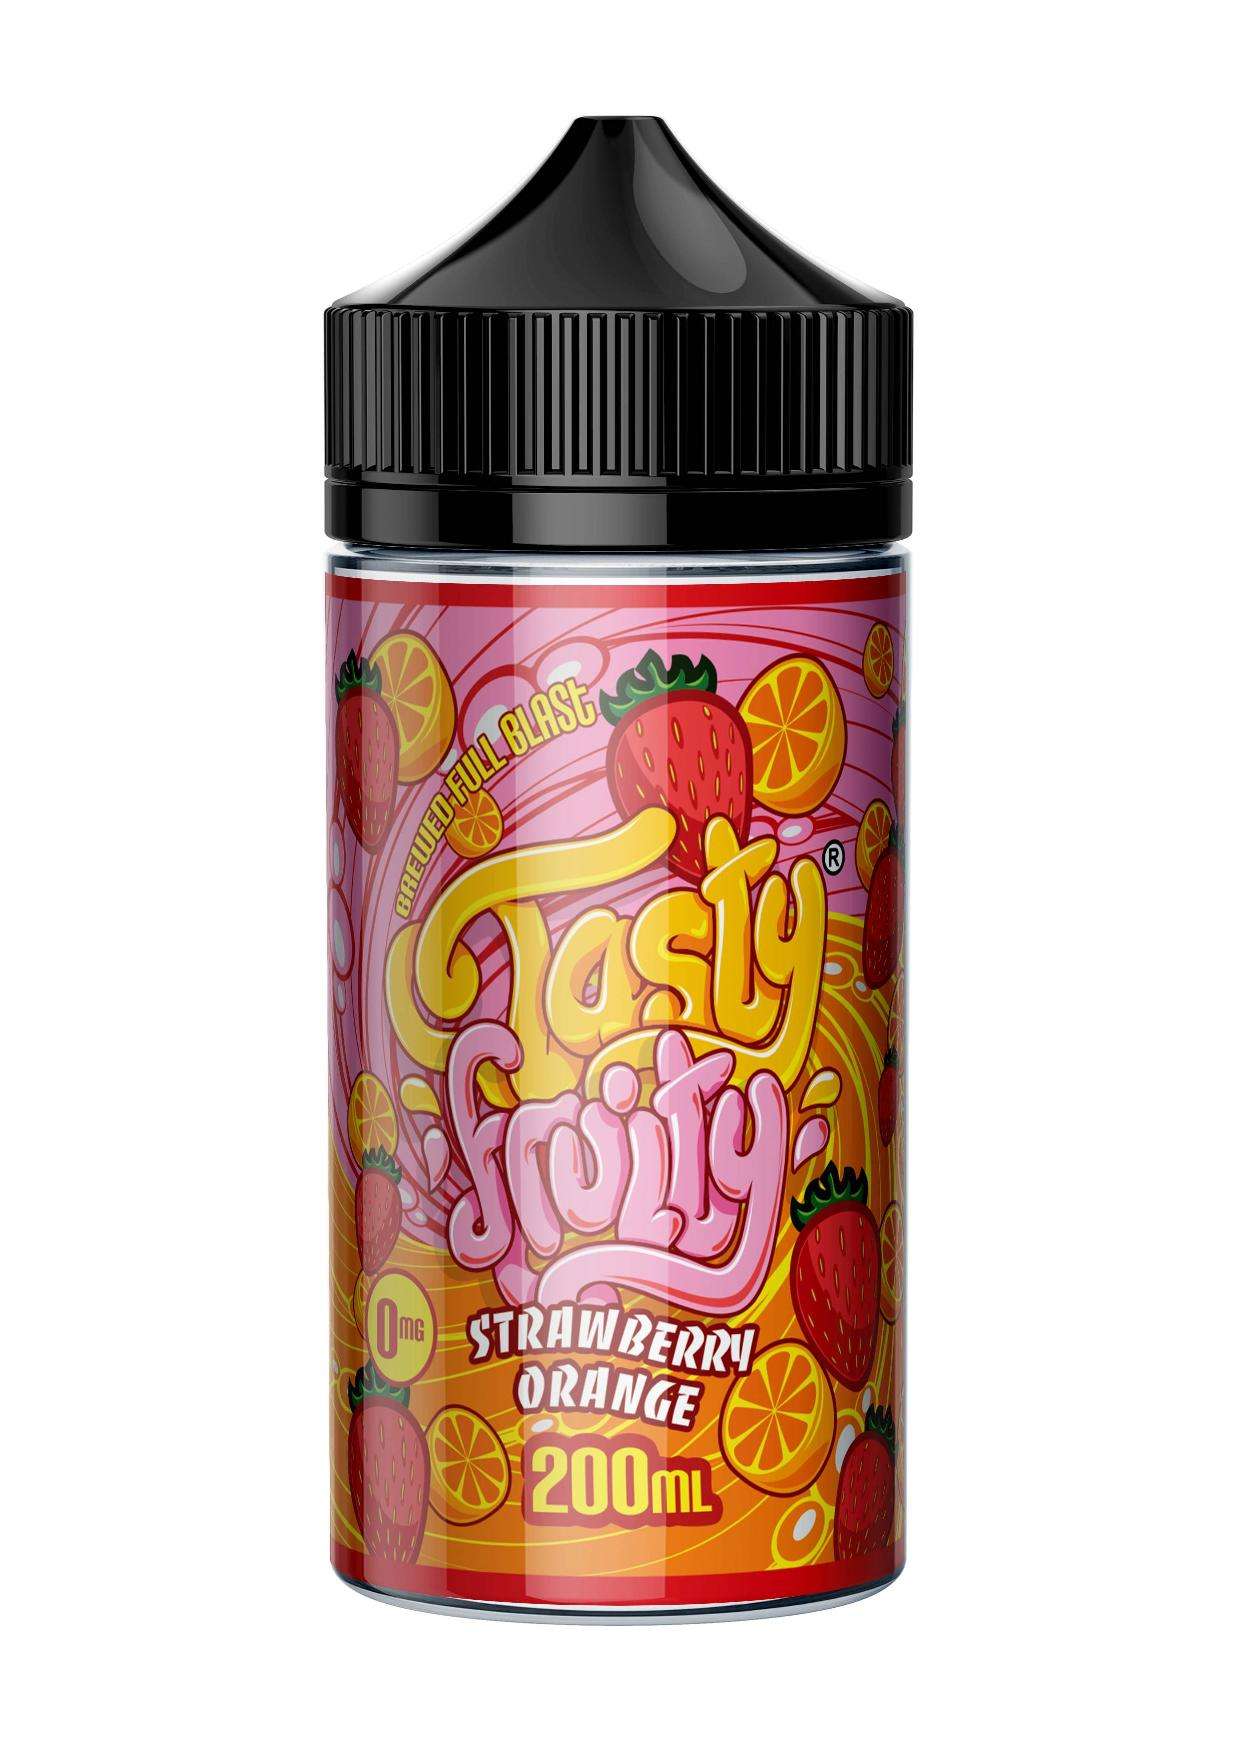  Tasty Fruity - Strawberry Orange - 200ml 